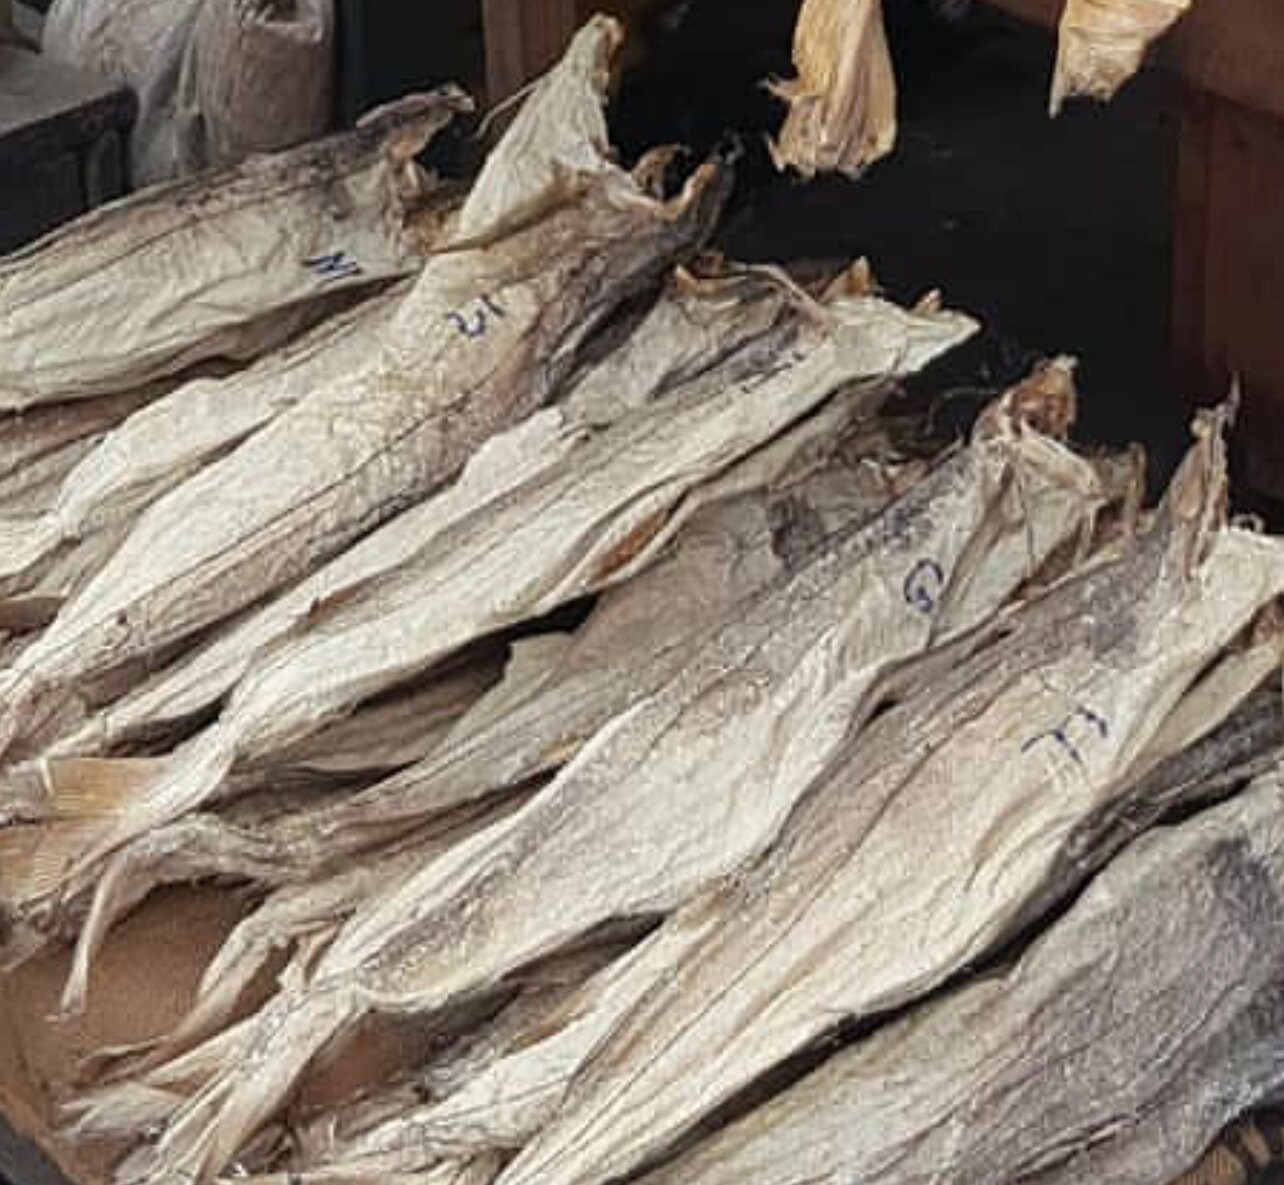 Buy Stockfish Online In India -  India